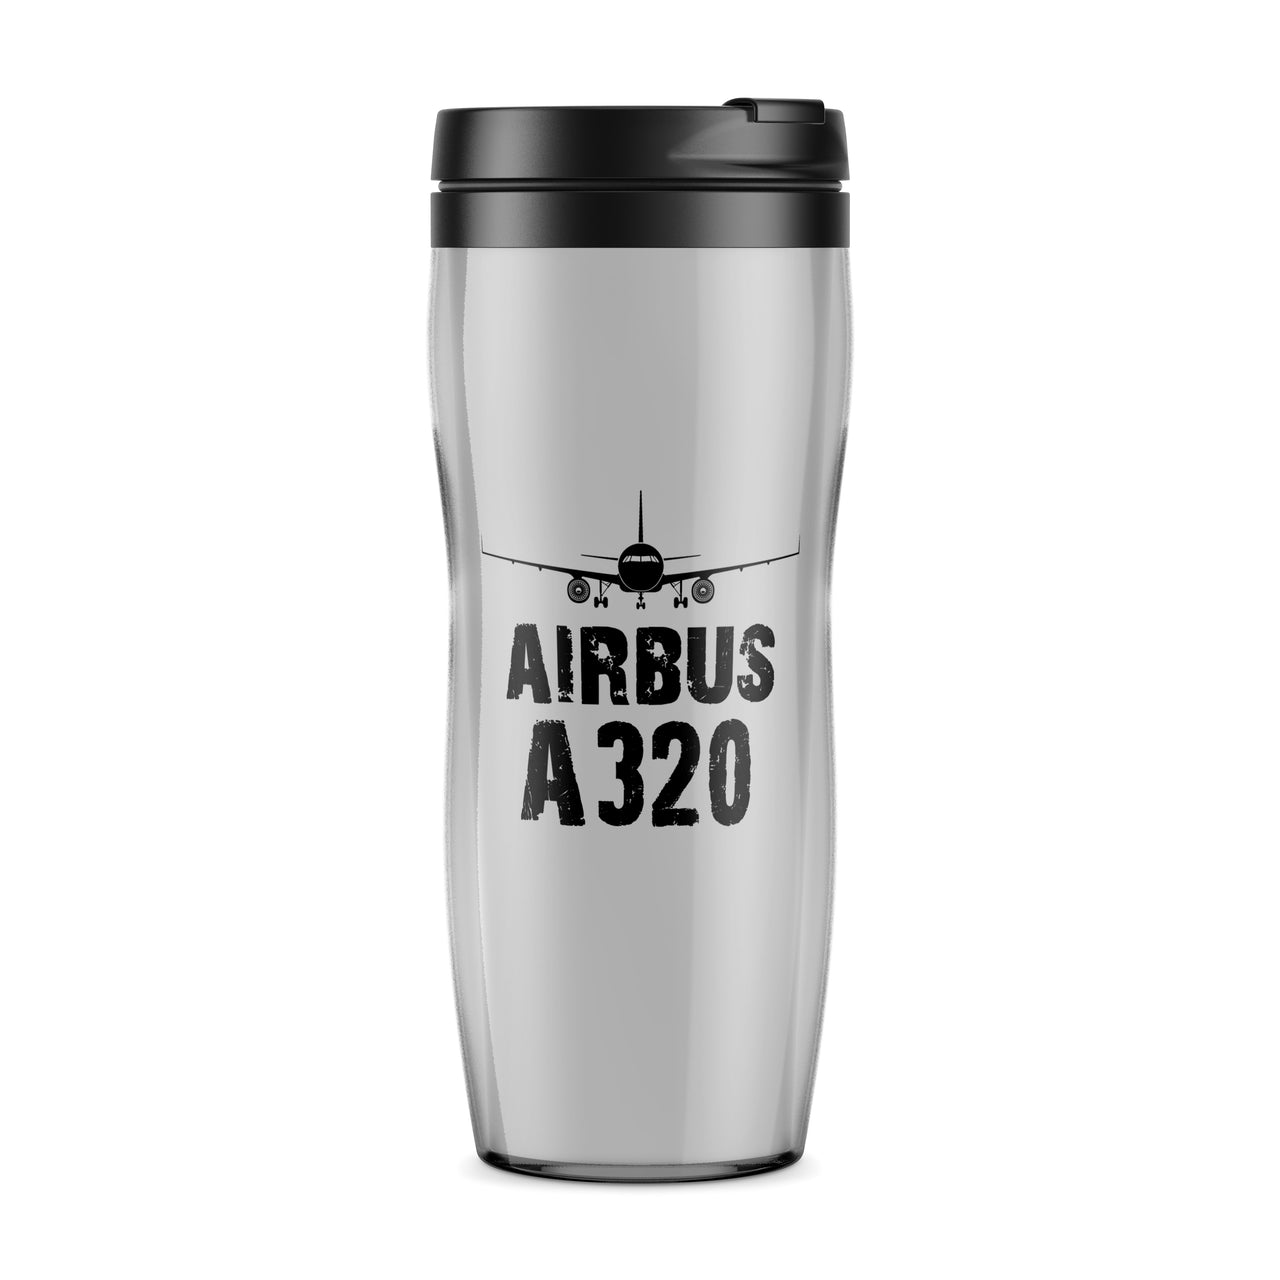 Airbus A320 & Plane Designed Travel Mugs